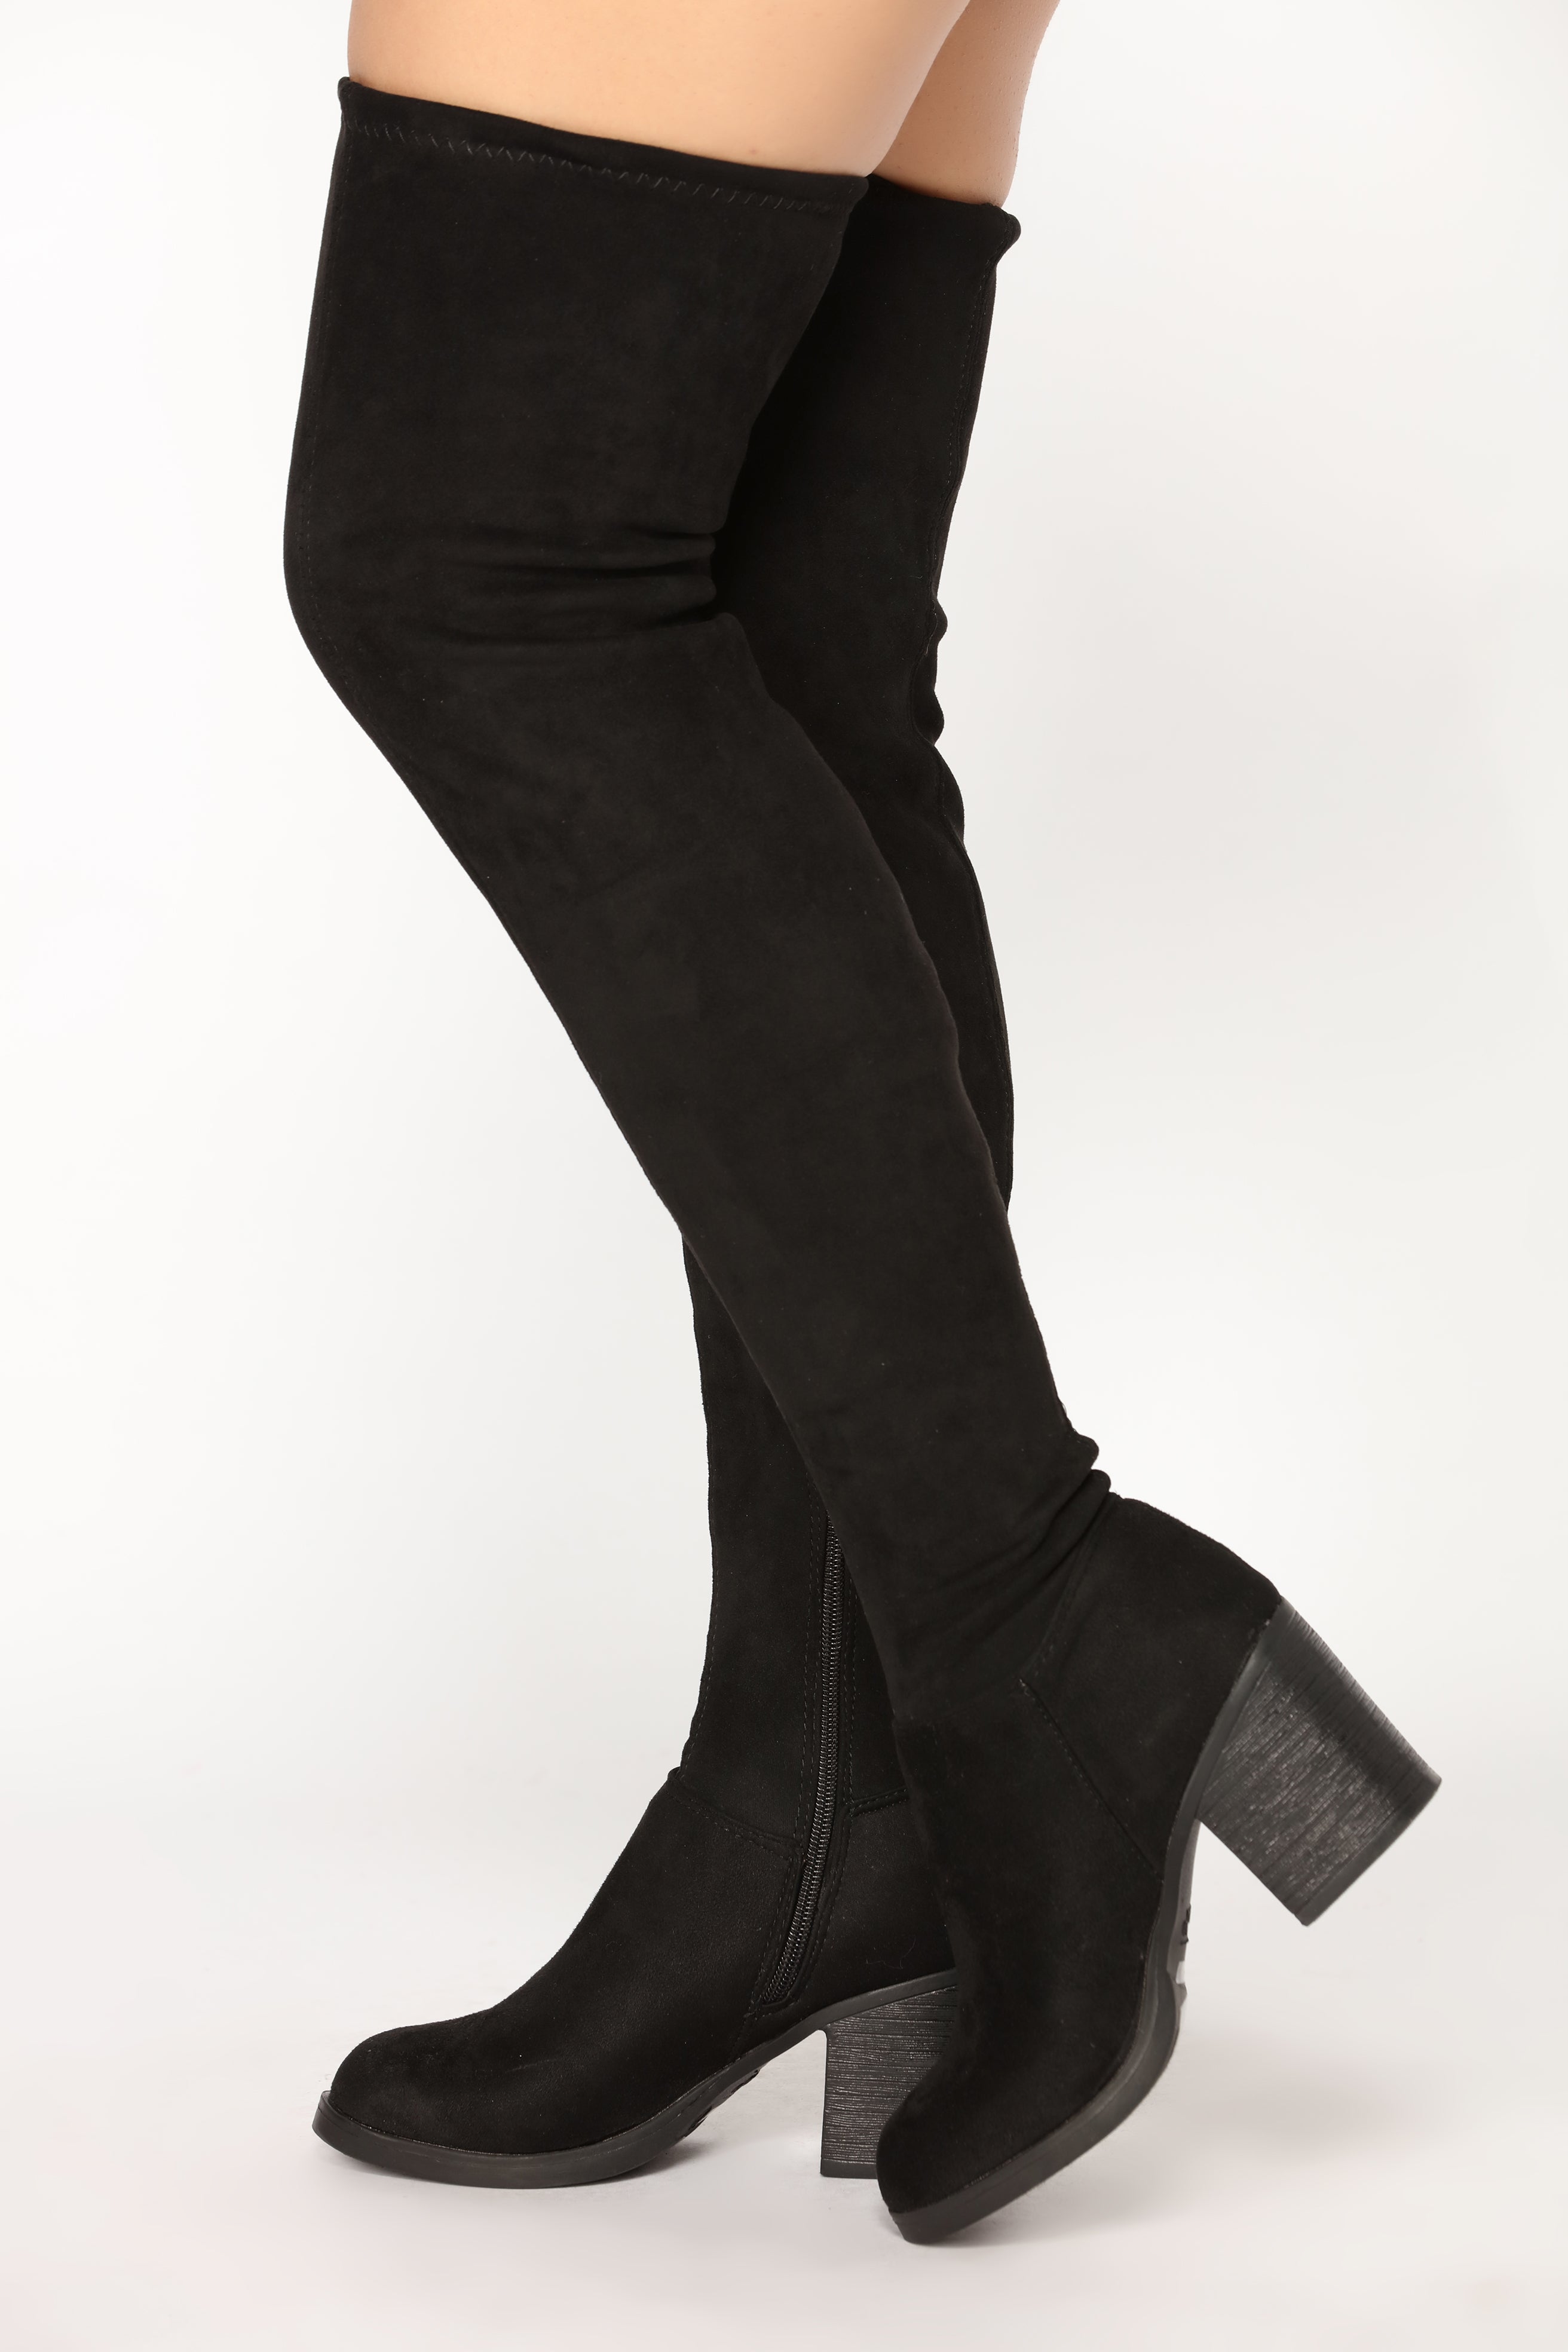 fashion nova thigh high boots